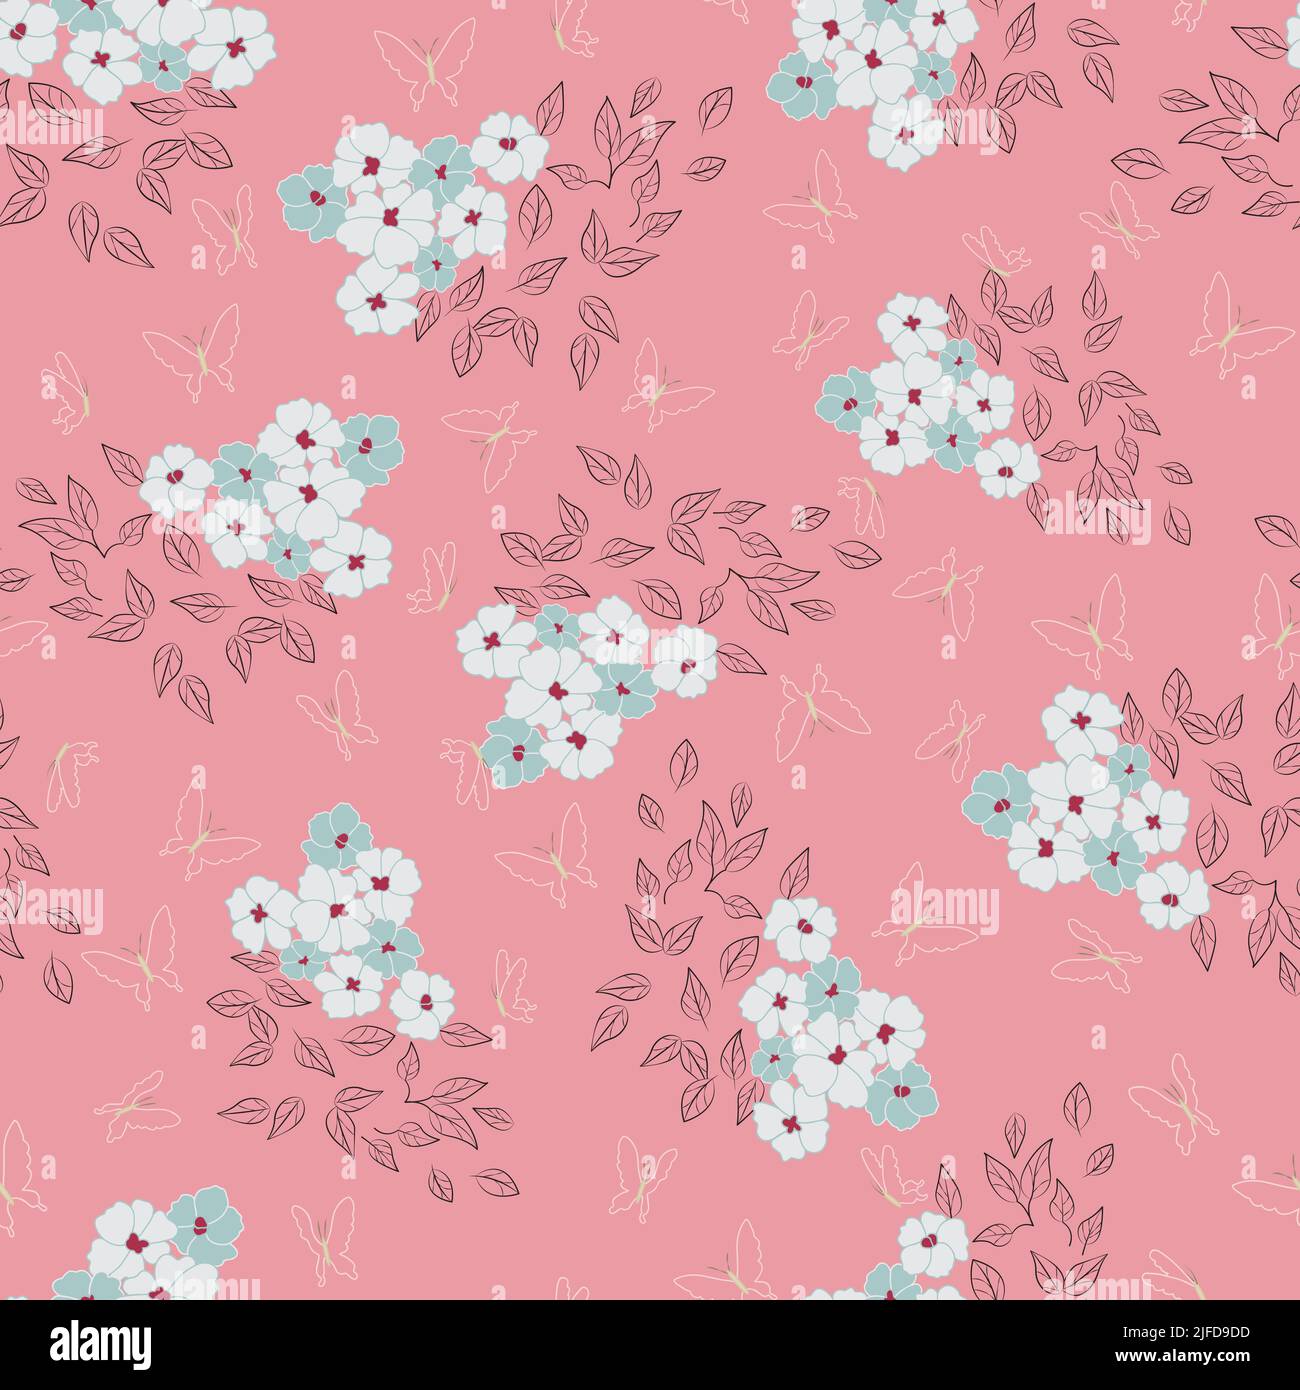 Vector pink butterflies garden seamless repeat pattern background. Stock Vector